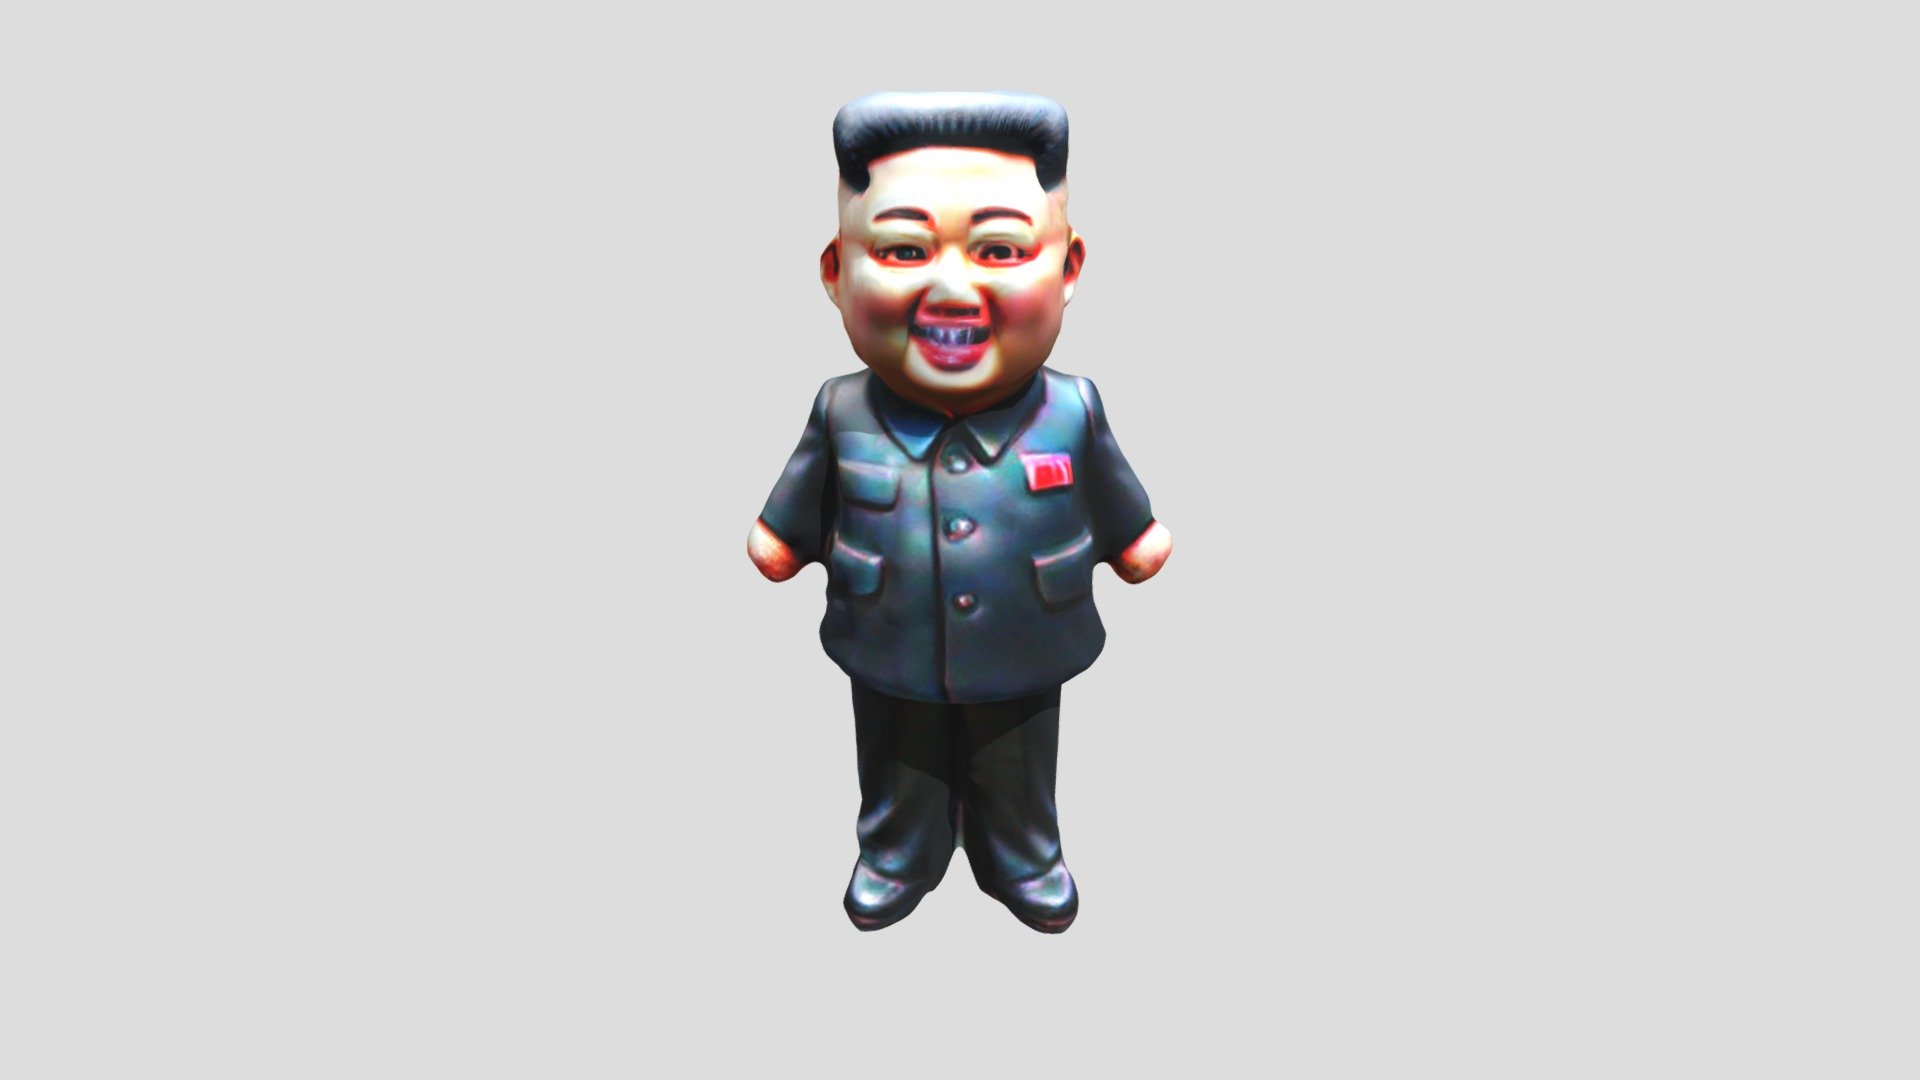 Kim Jong Un Bobblehead, Lifelike, Realistic, High Quality, Highly Detailed, Sharp - Kim Jong Un Bobblehead - Buy Royalty Free 3D model by HistoryView.org (@HistoryView) 3d model